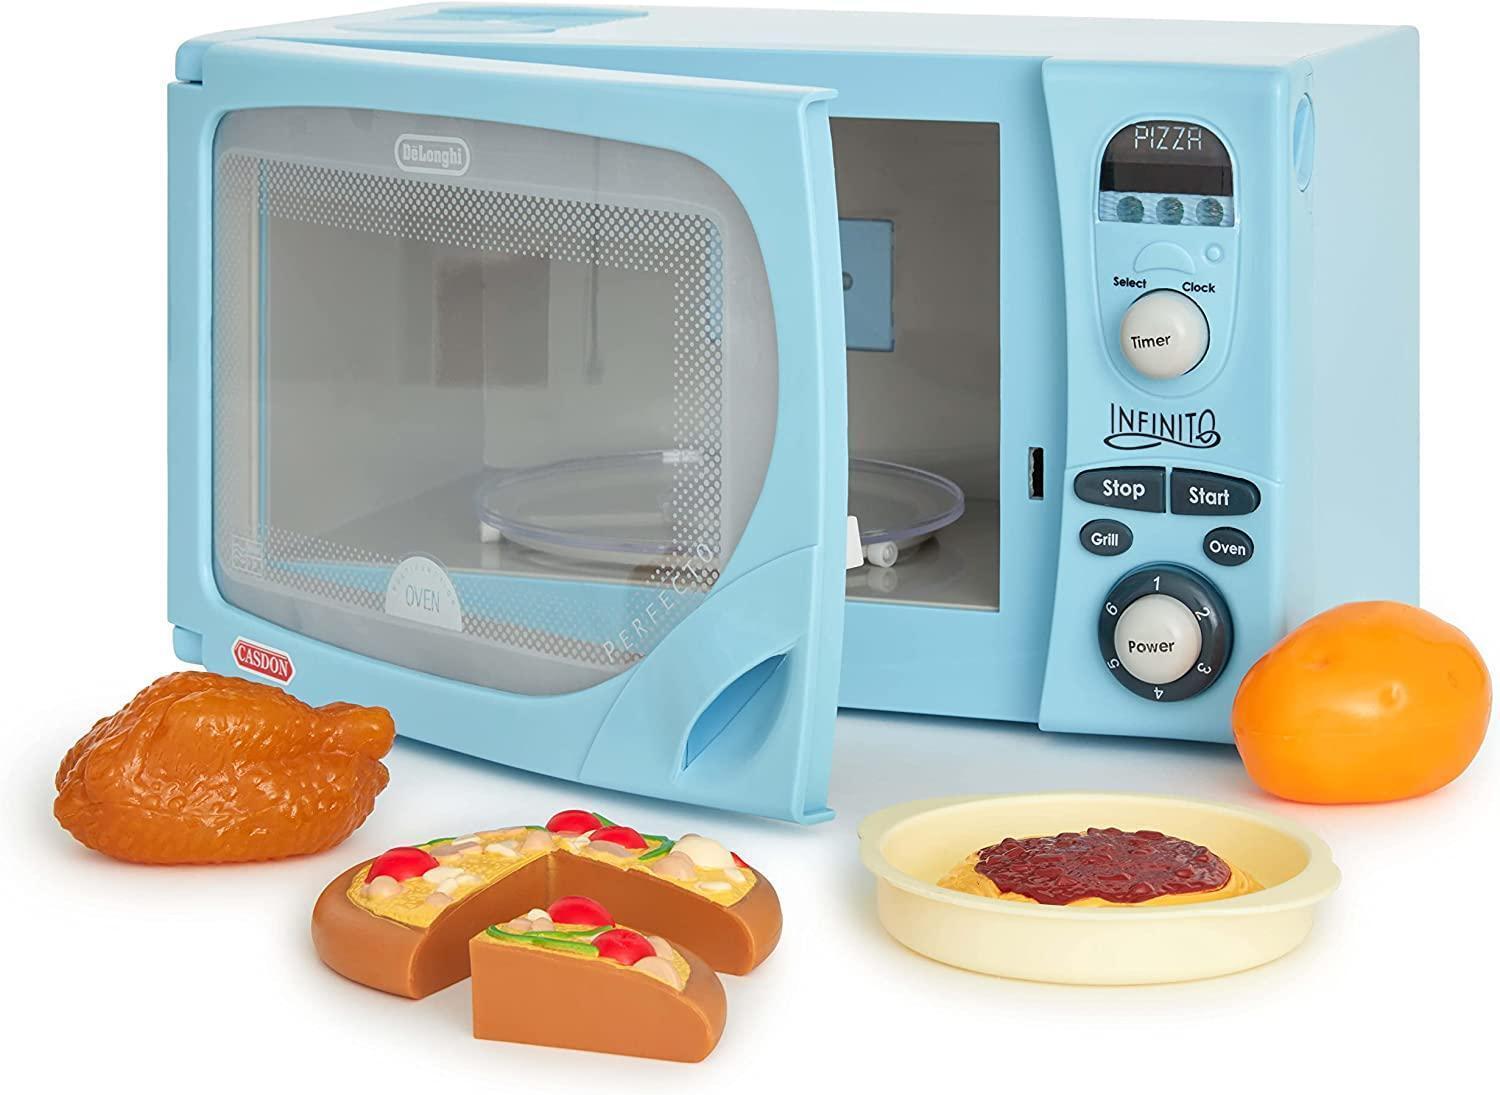 Casdon Delonghi BLUE Toy Microwave 49250